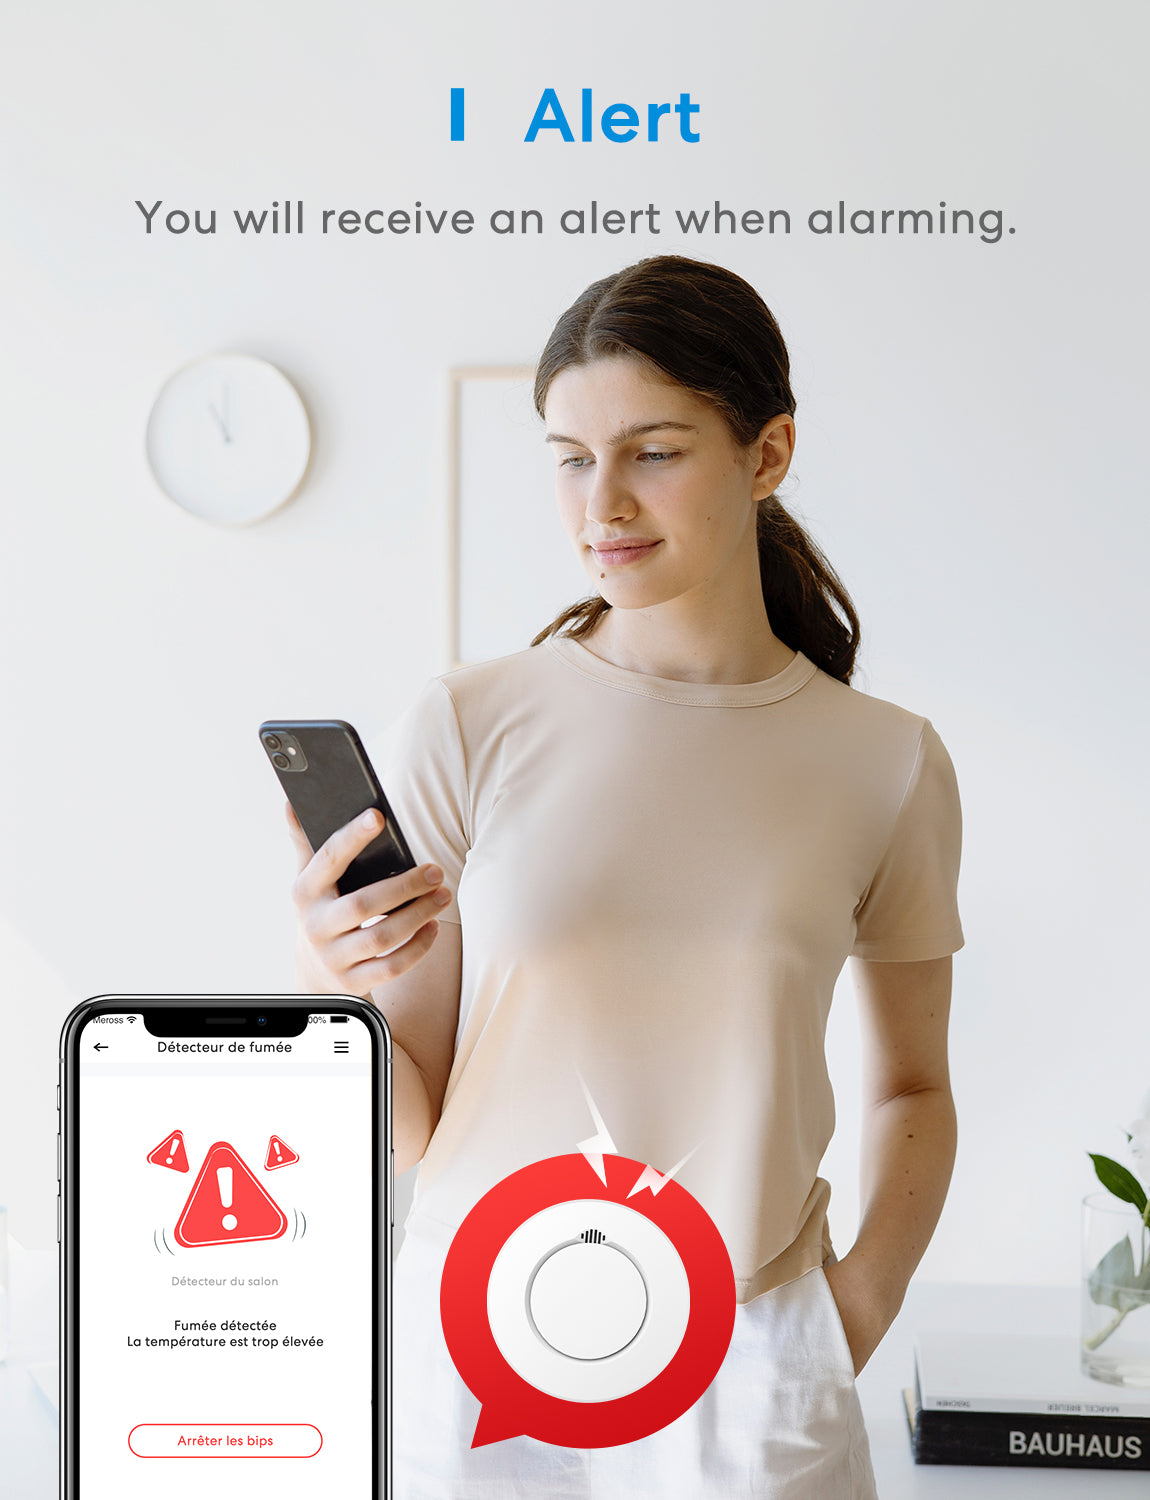 Netatmo Smart Smoke Alarm: détecteur de fumée intelligent - www